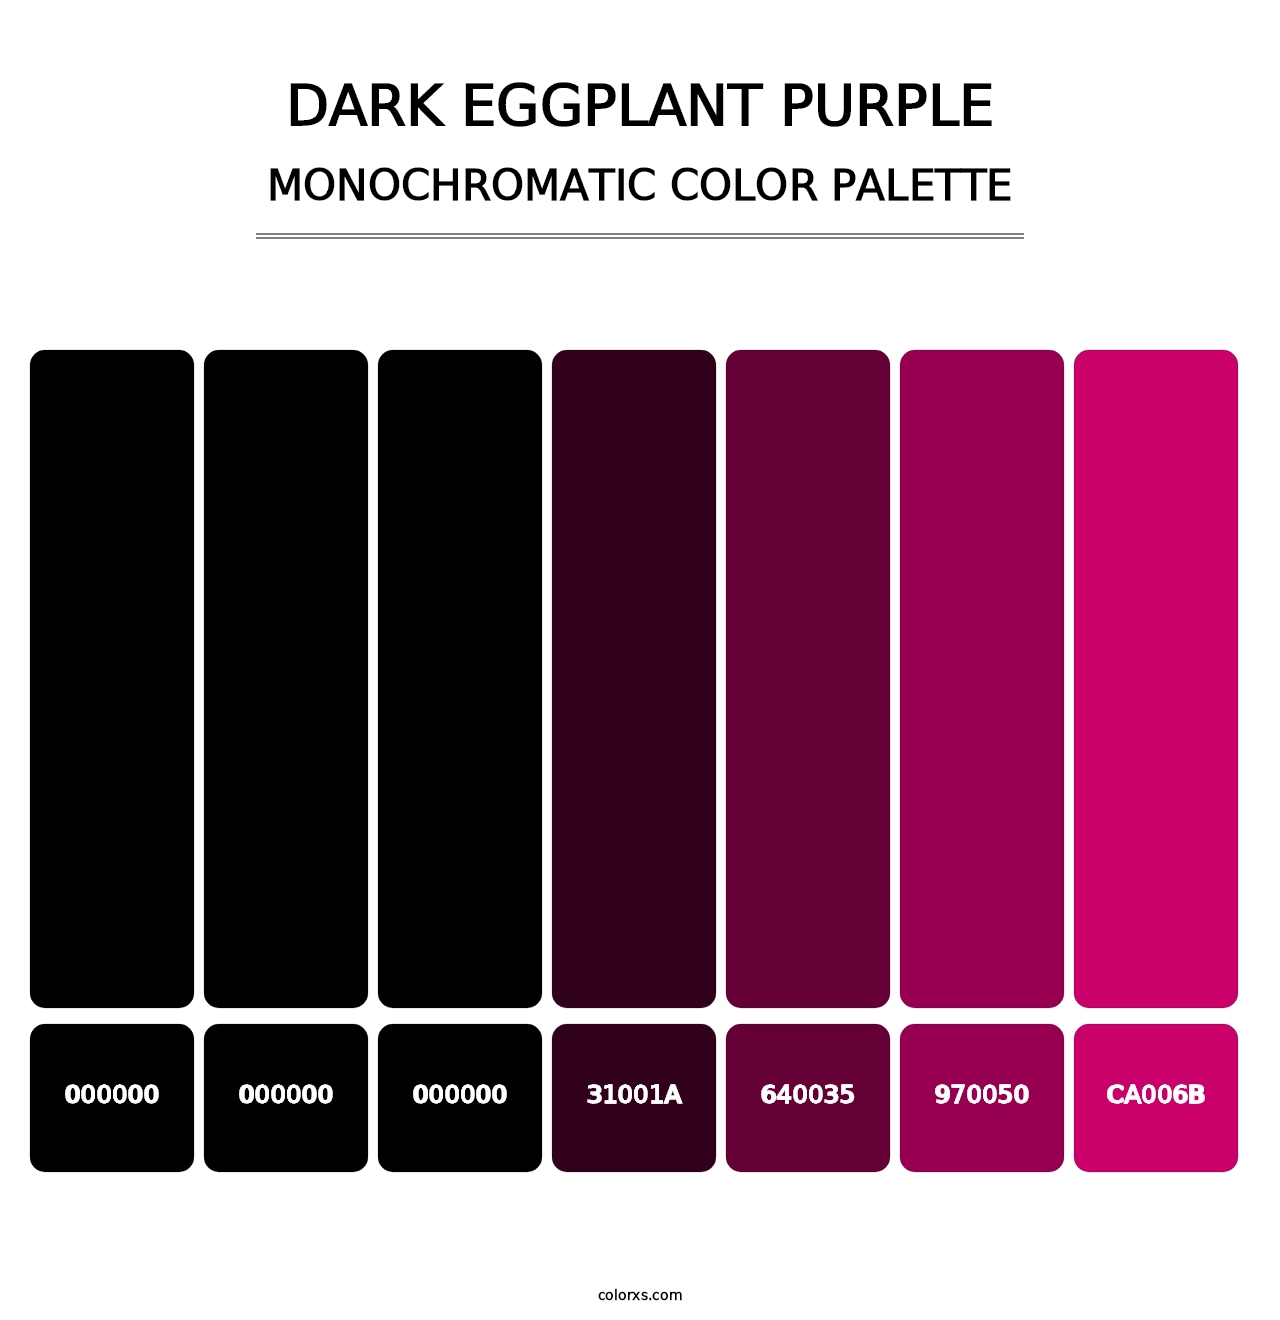 Dark Eggplant Purple - Monochromatic Color Palette